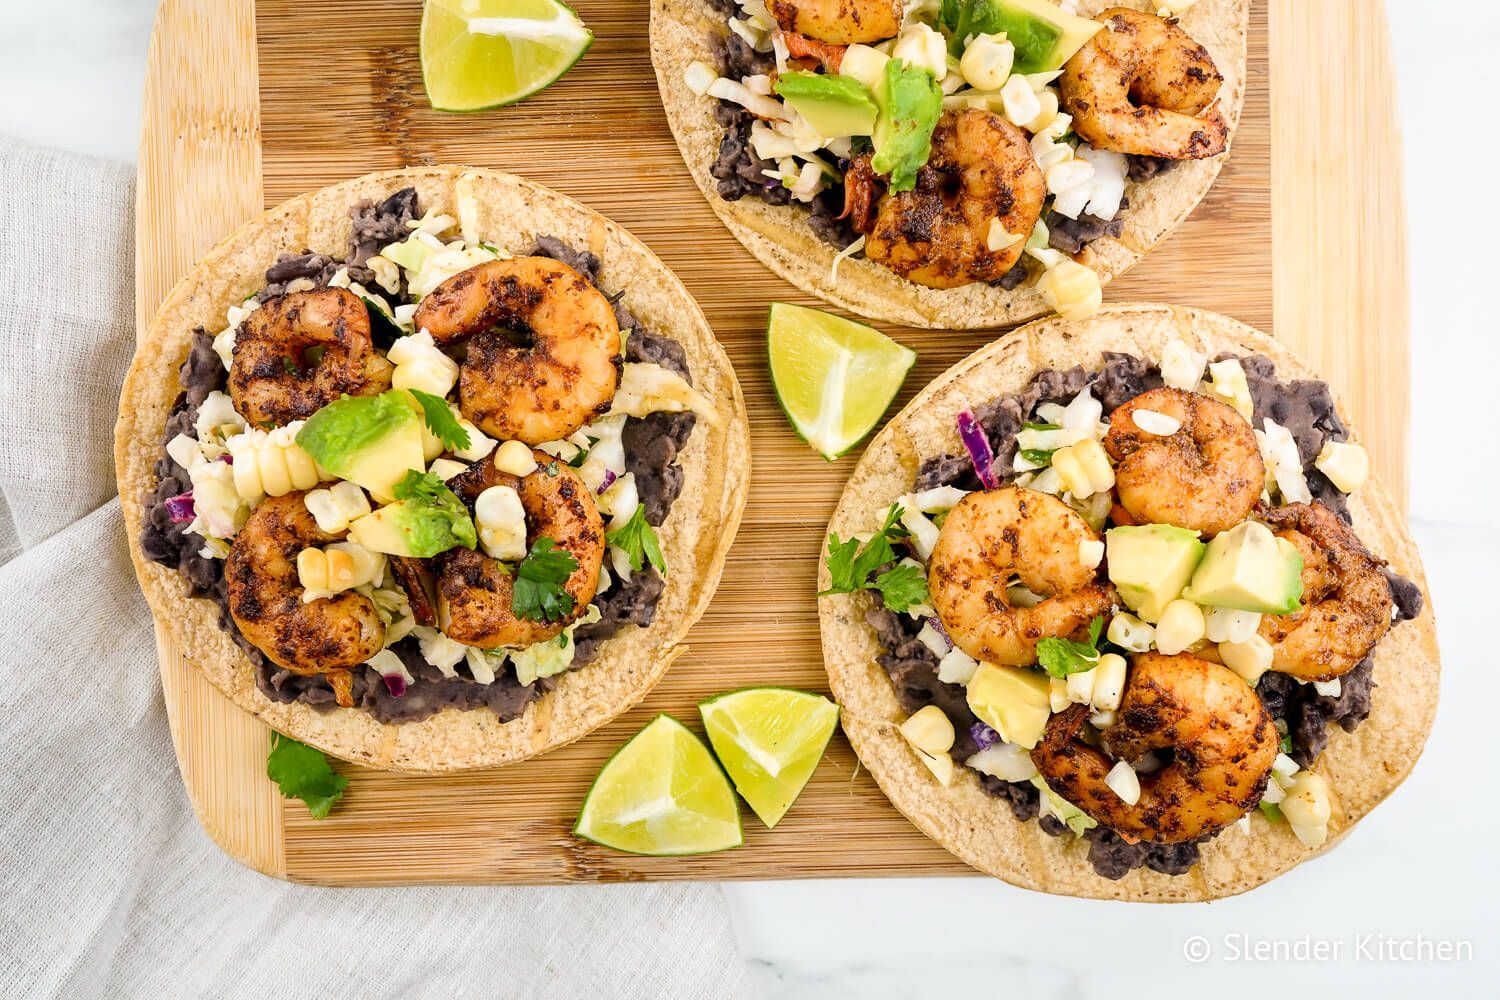 Shrimp tostadas with black beans, cabbage, spiced shrimp, avocado, and corn on baked tortillas.